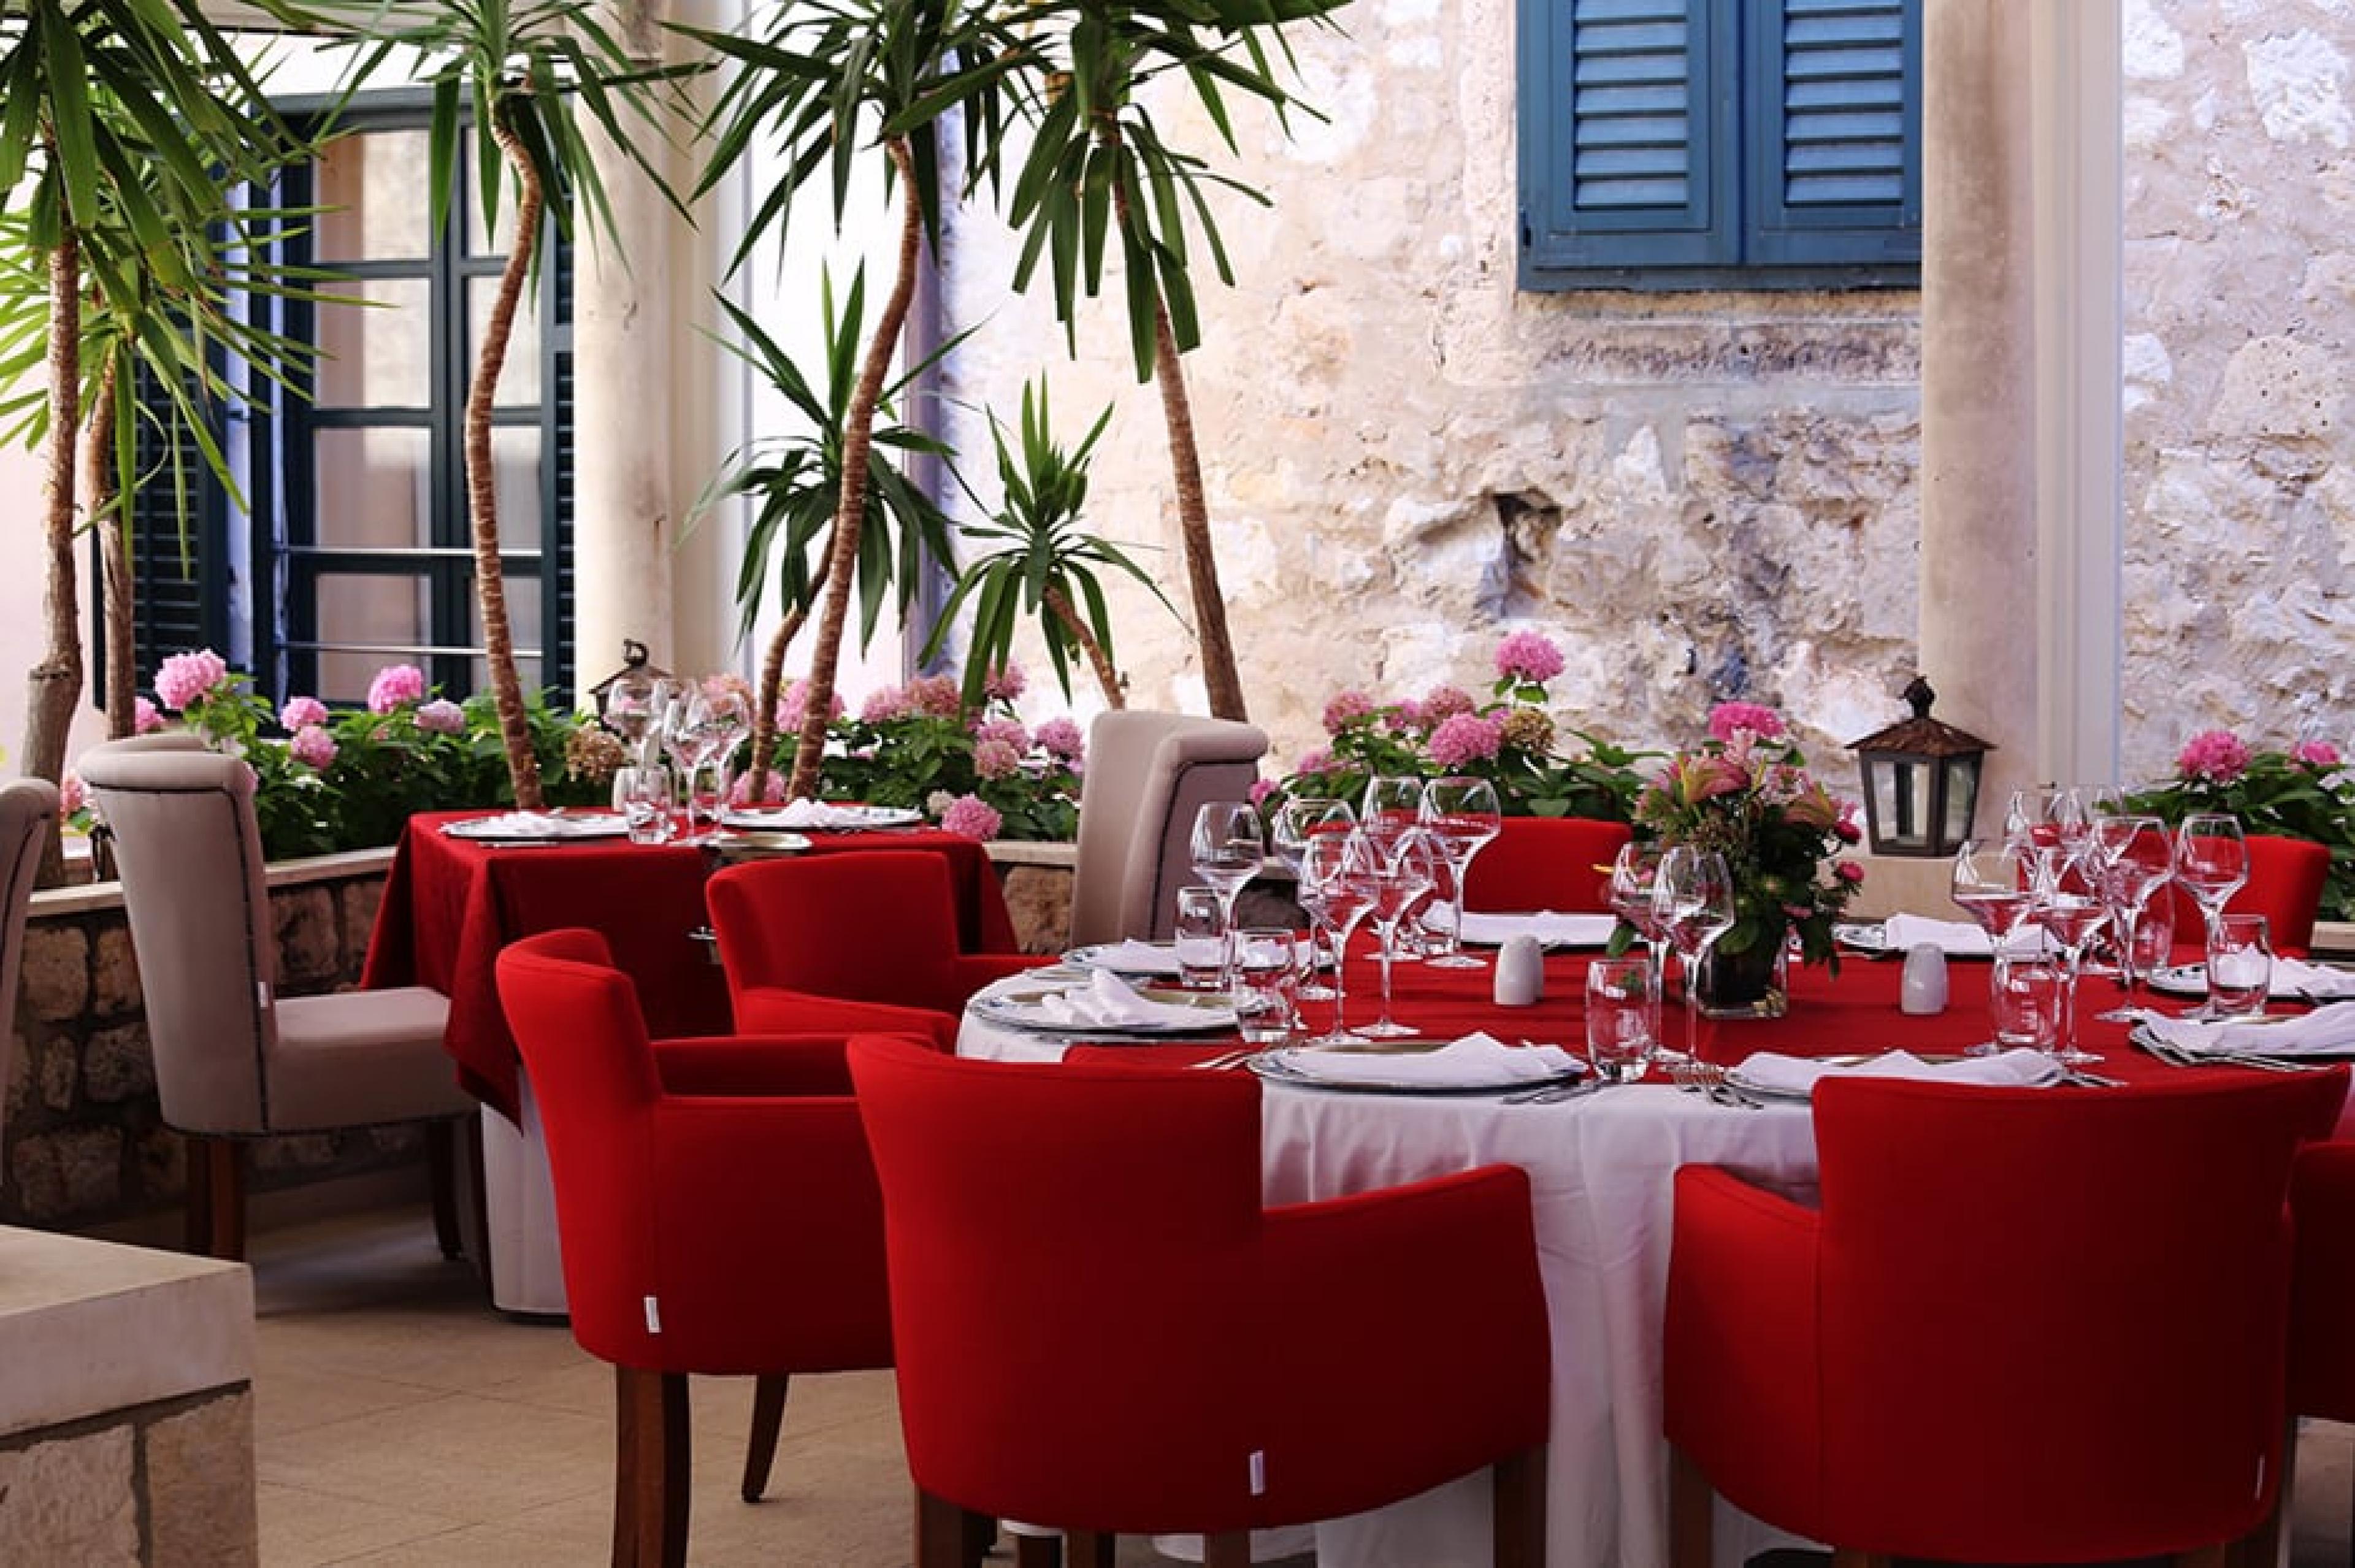 Interiors at Restaurant Dubrovnik, Croatia